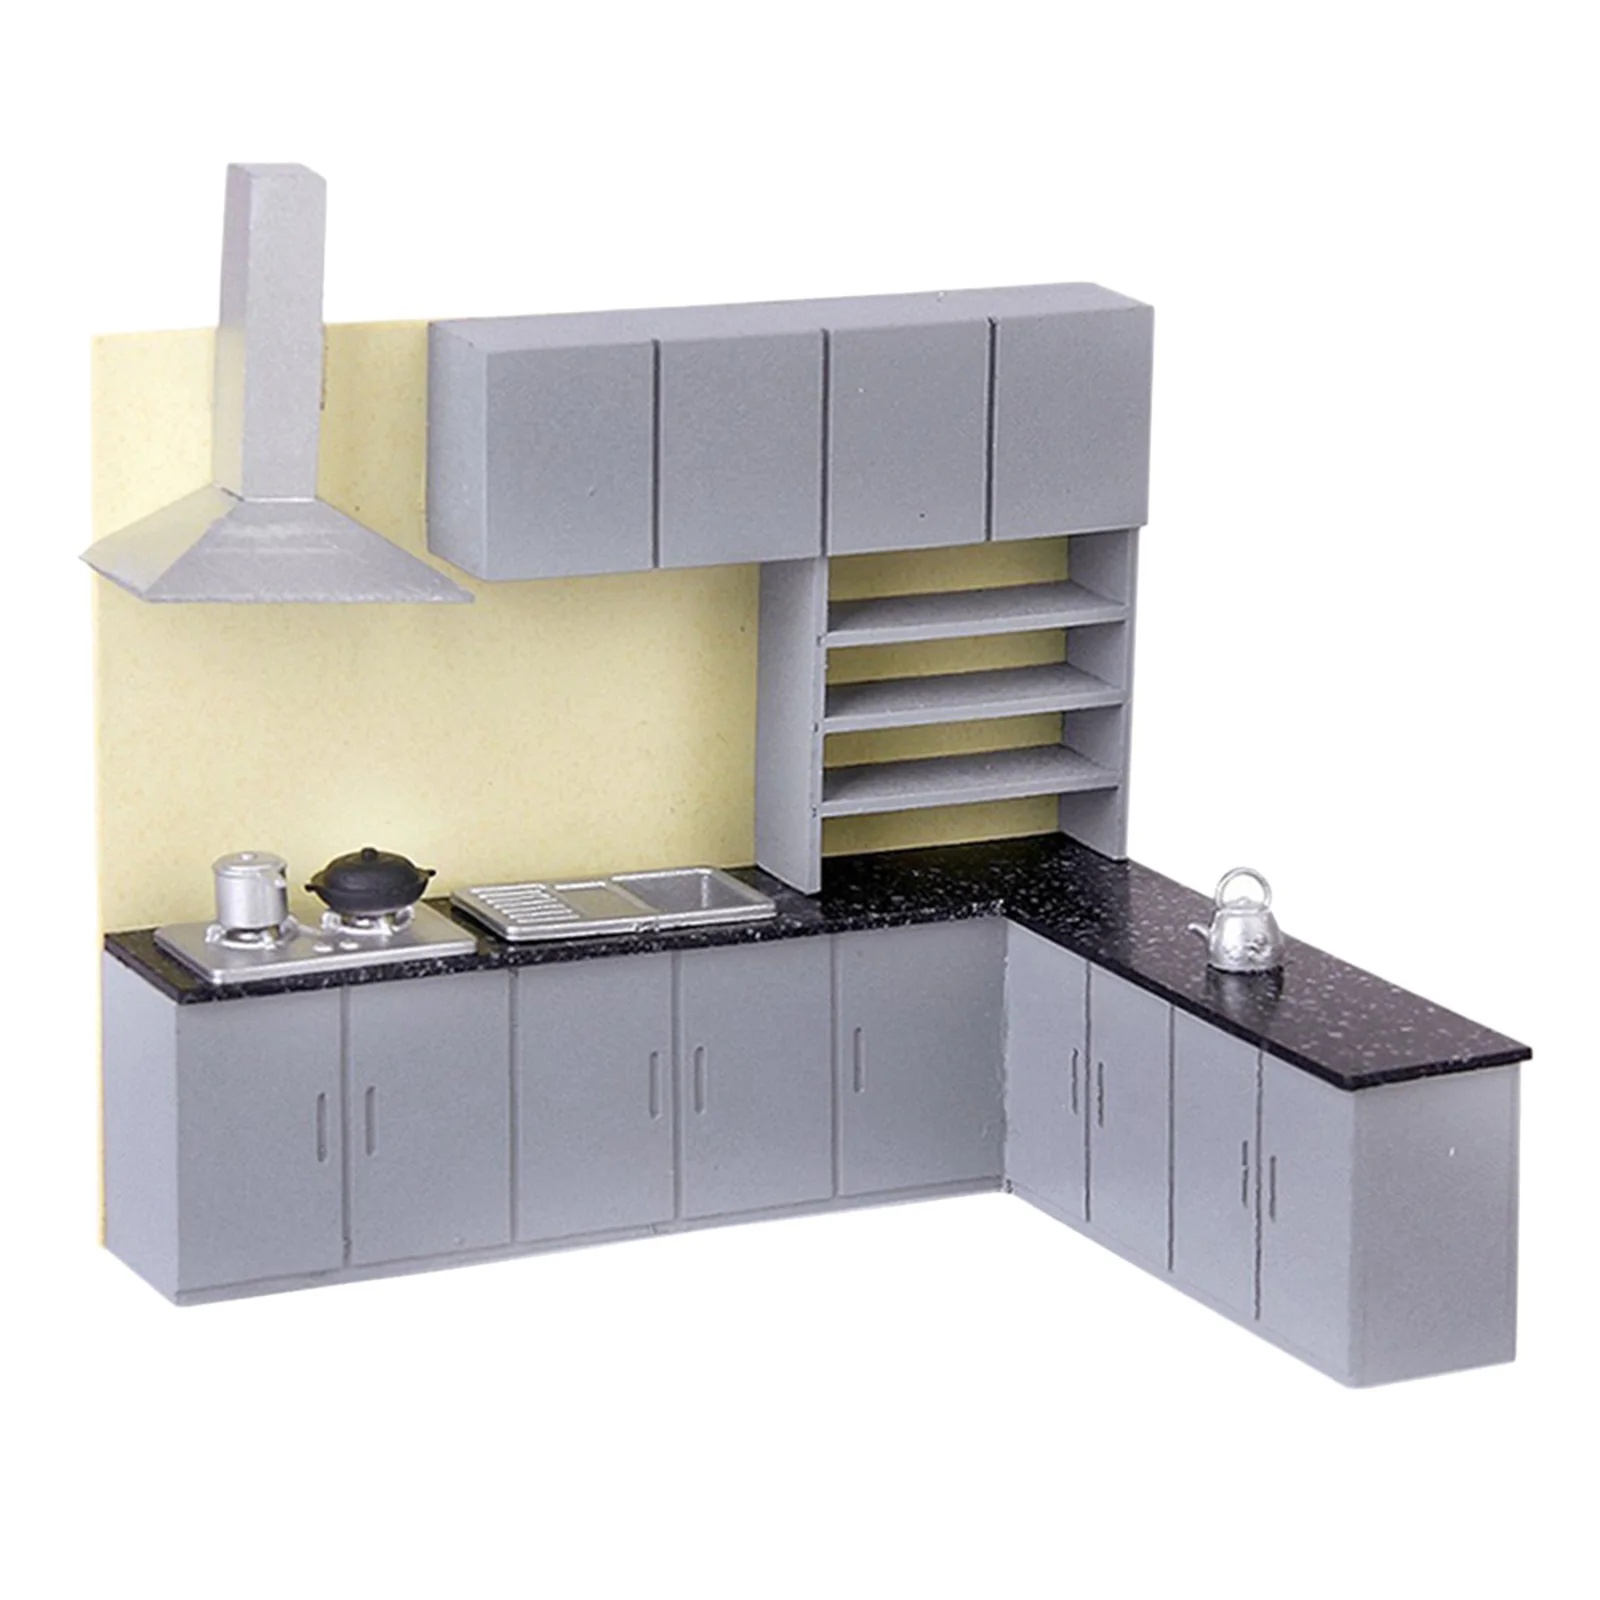 1:25 Dollhouse Kitchen Cabinets Mini Furniture Cupboard Stove Counter Toys